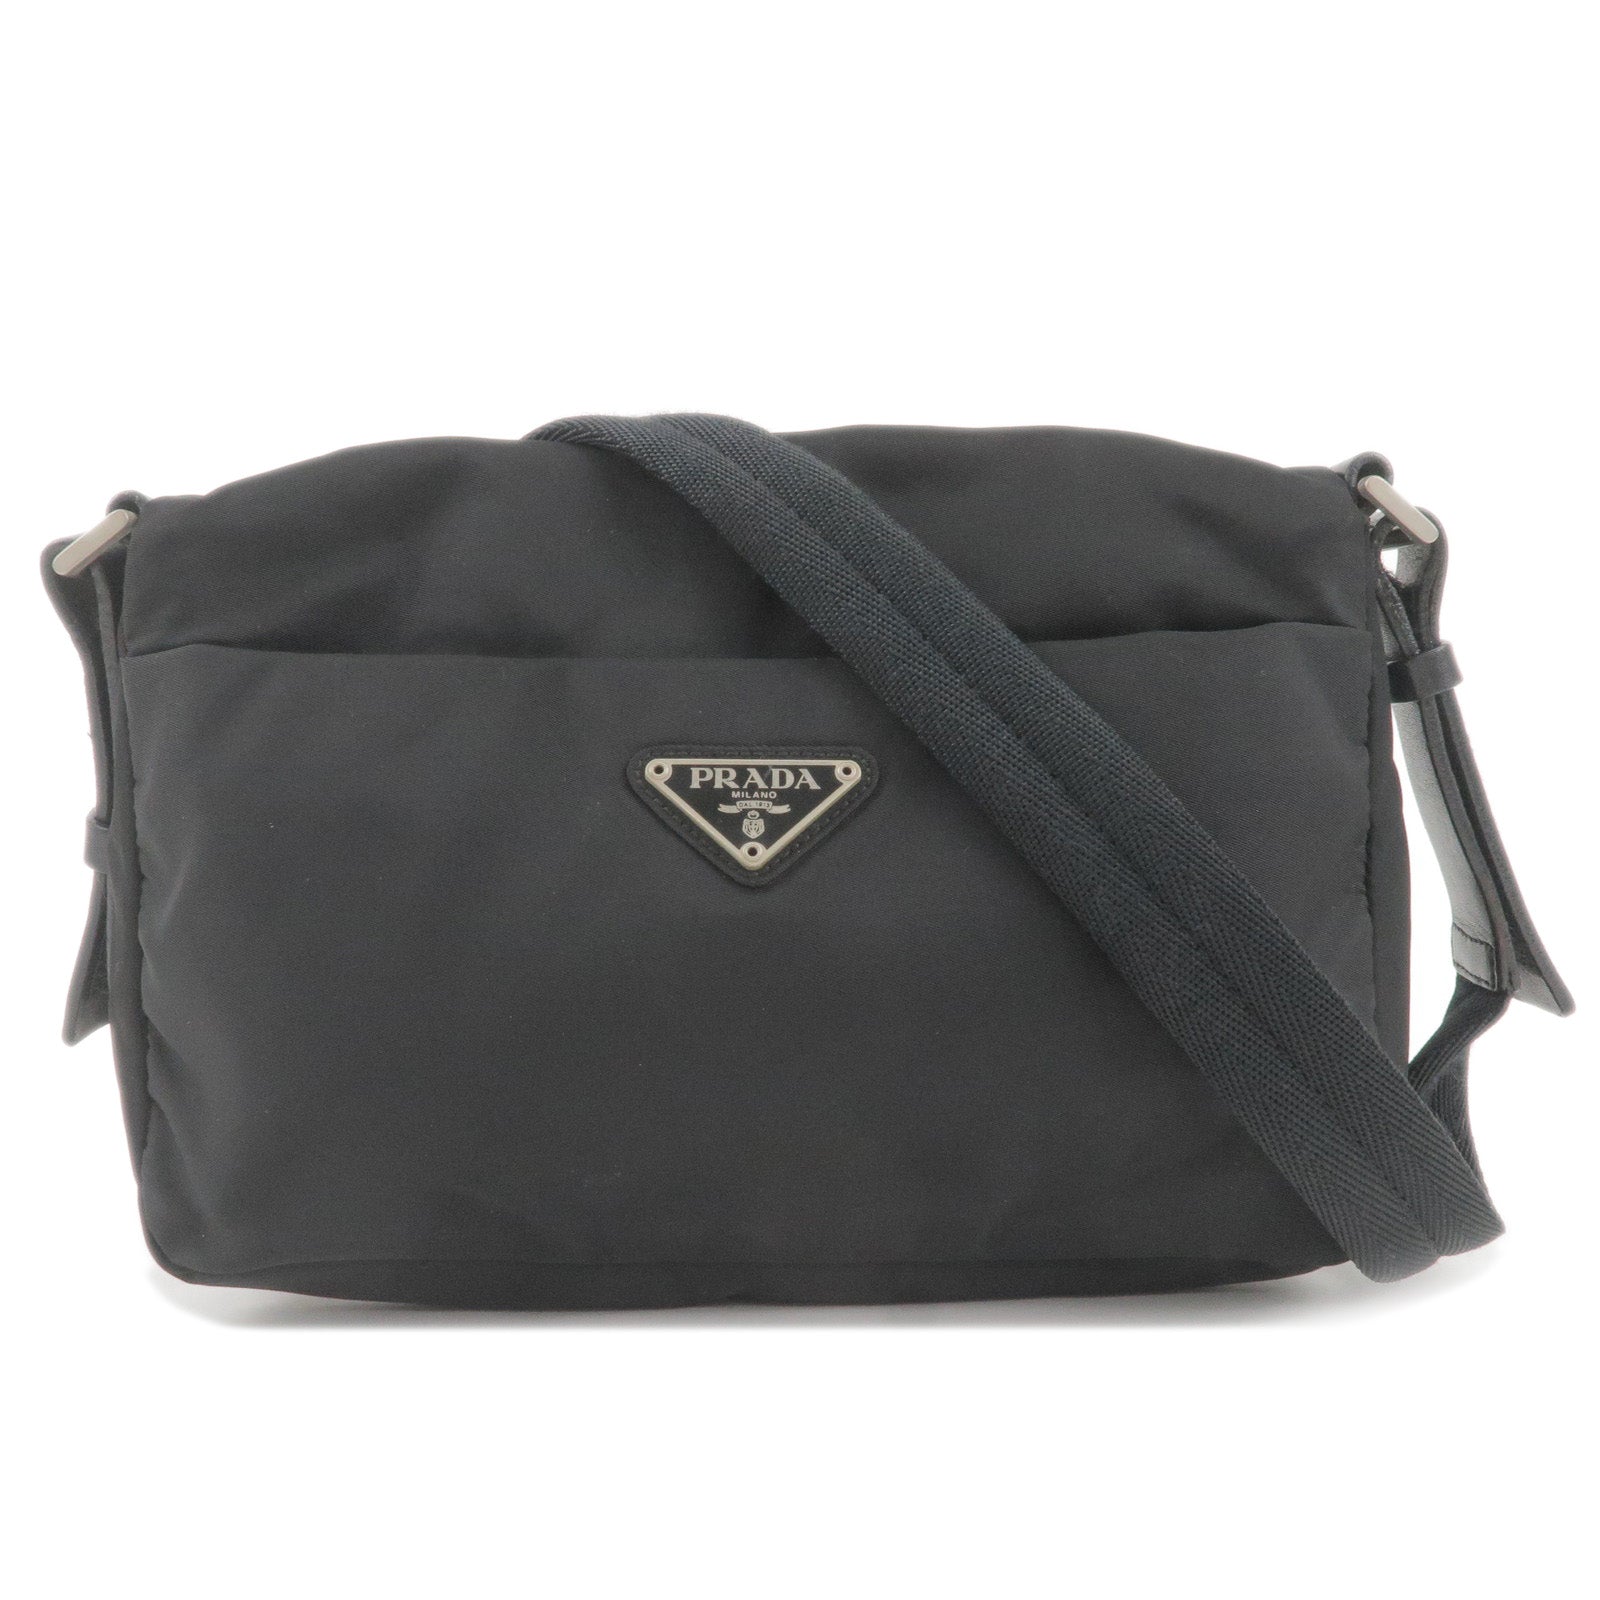 PRADA-Logo-Nylon-Leather-Shoulder-Bag-NERO-Black-B9717